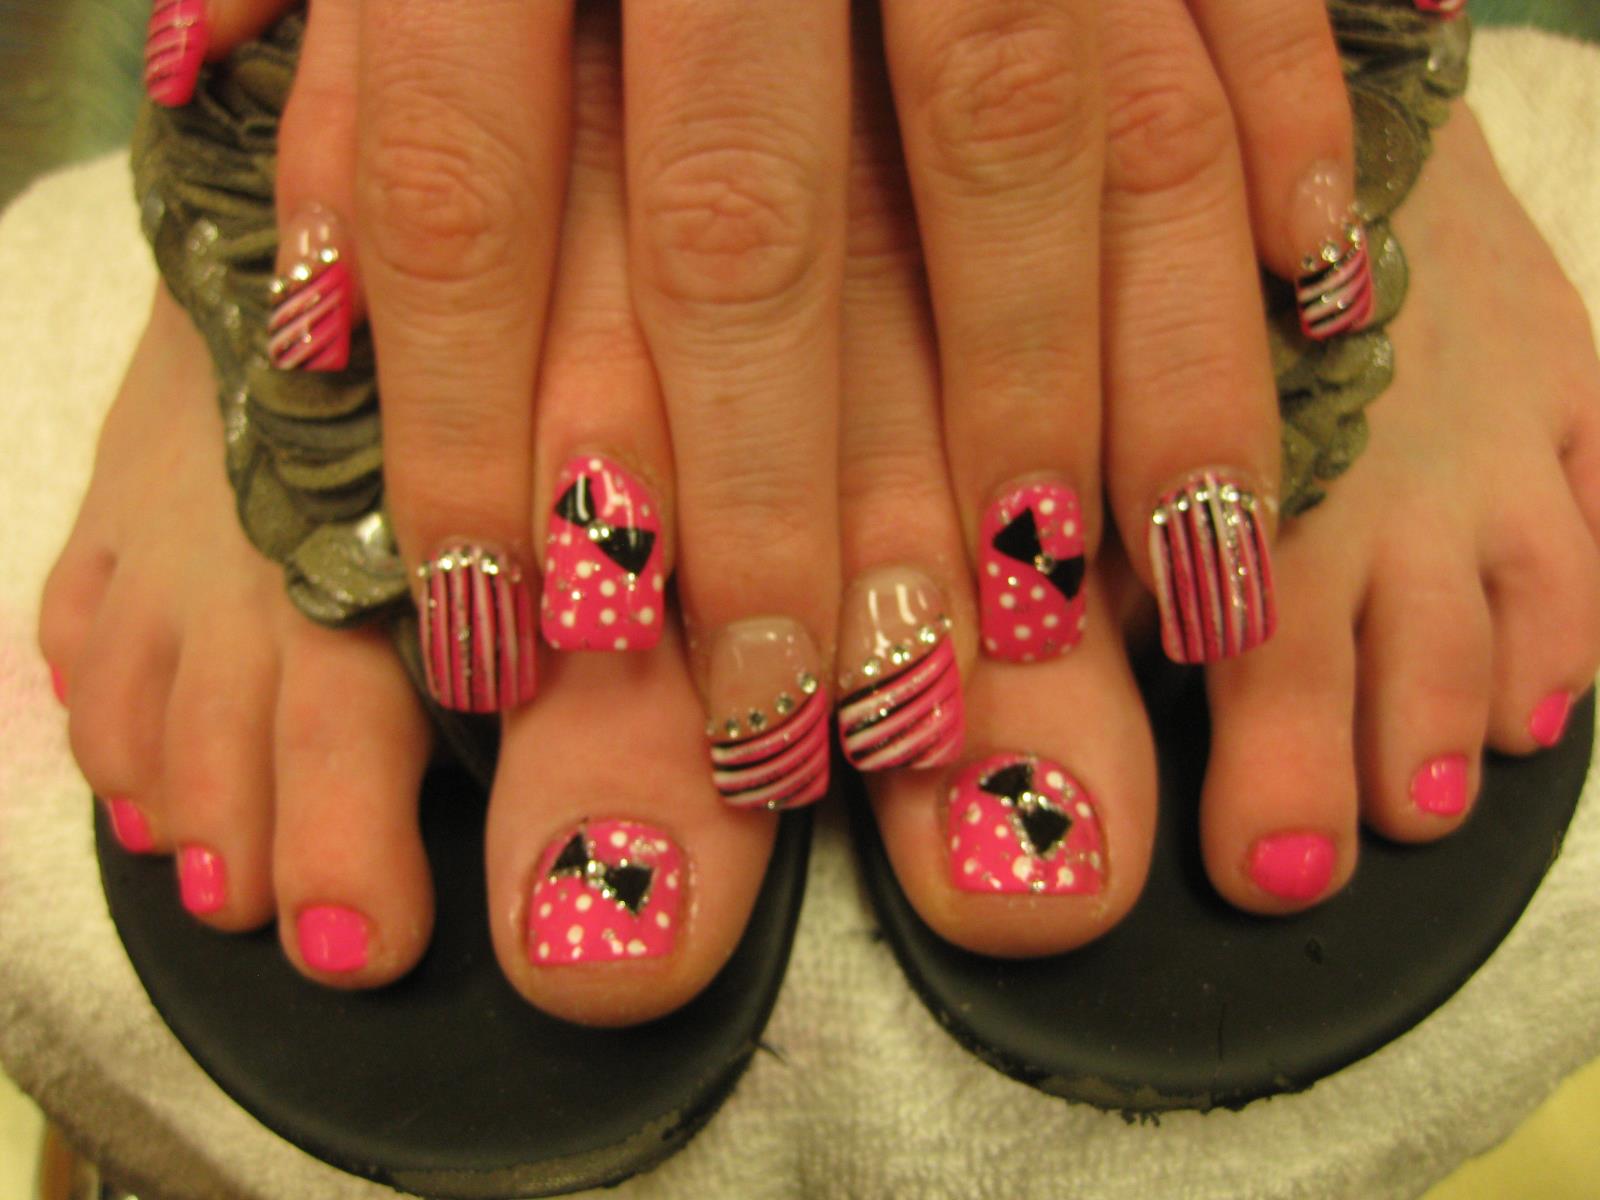 Pink Polka Dot Tuxedo Nail Art Design By Top Nails Clarksville Tn